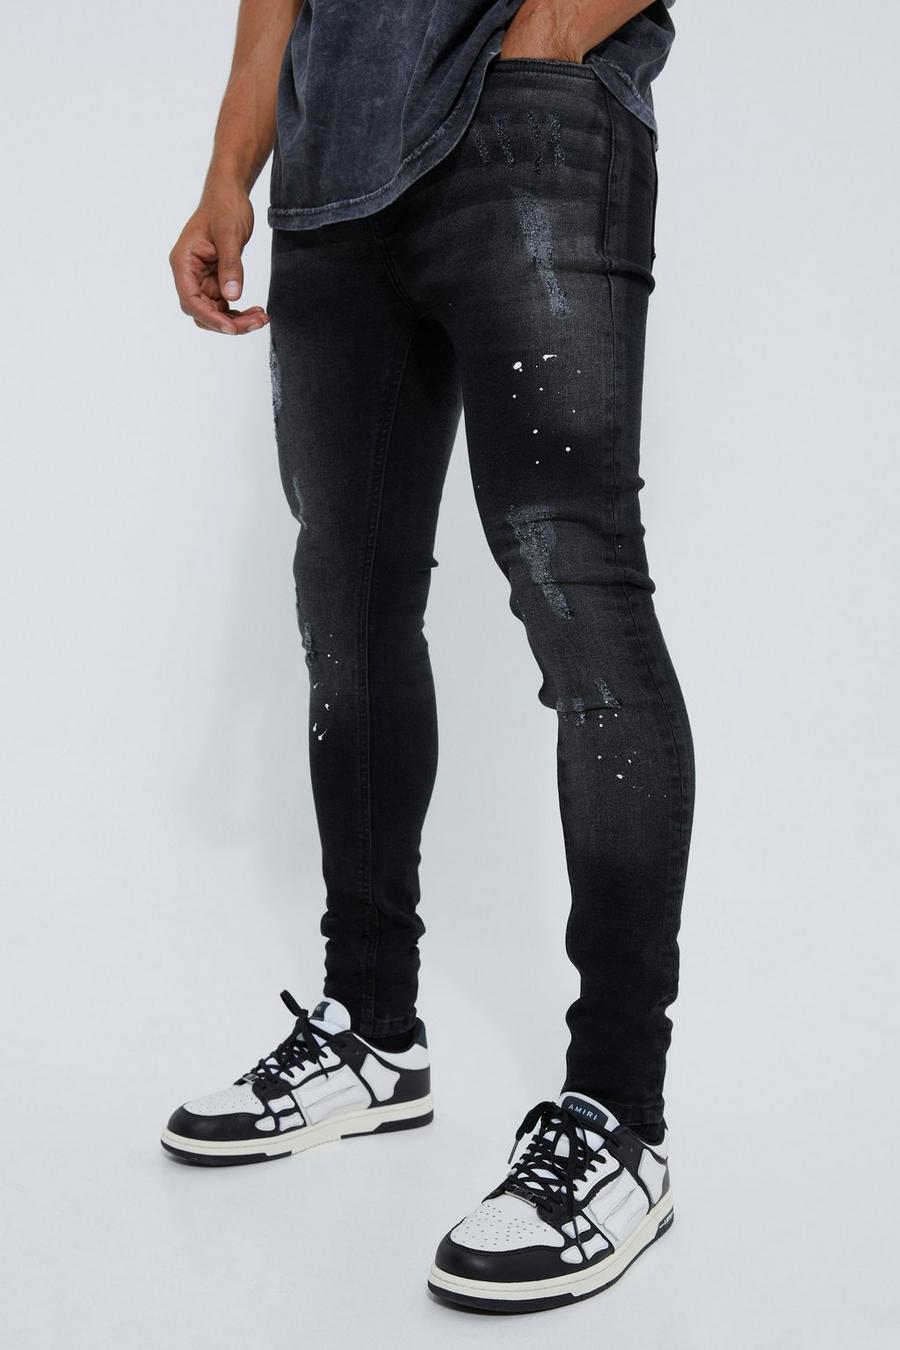 Amiri Paint splatter distressed jeans - Luxed